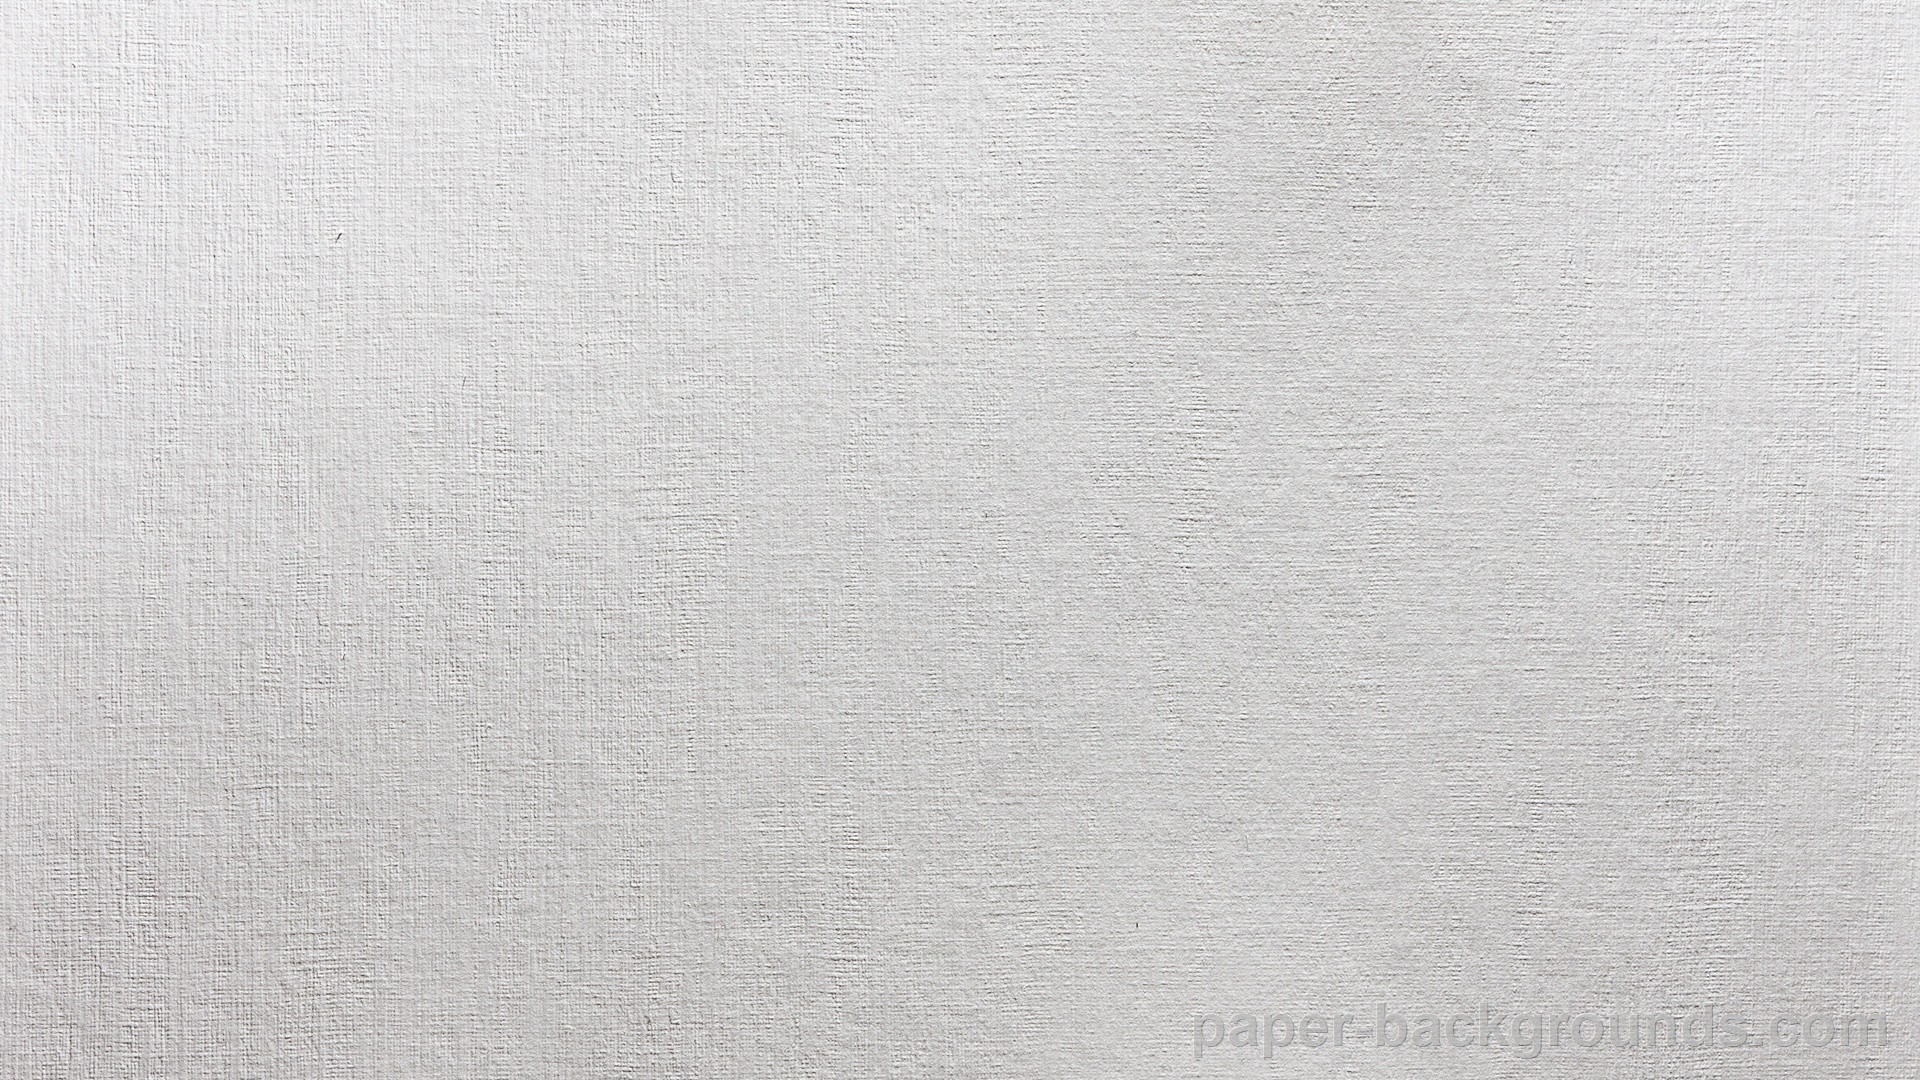 1920x1080 Wallpapers Old Paper Wallpaper Wallpaper Paper Wallpapers)